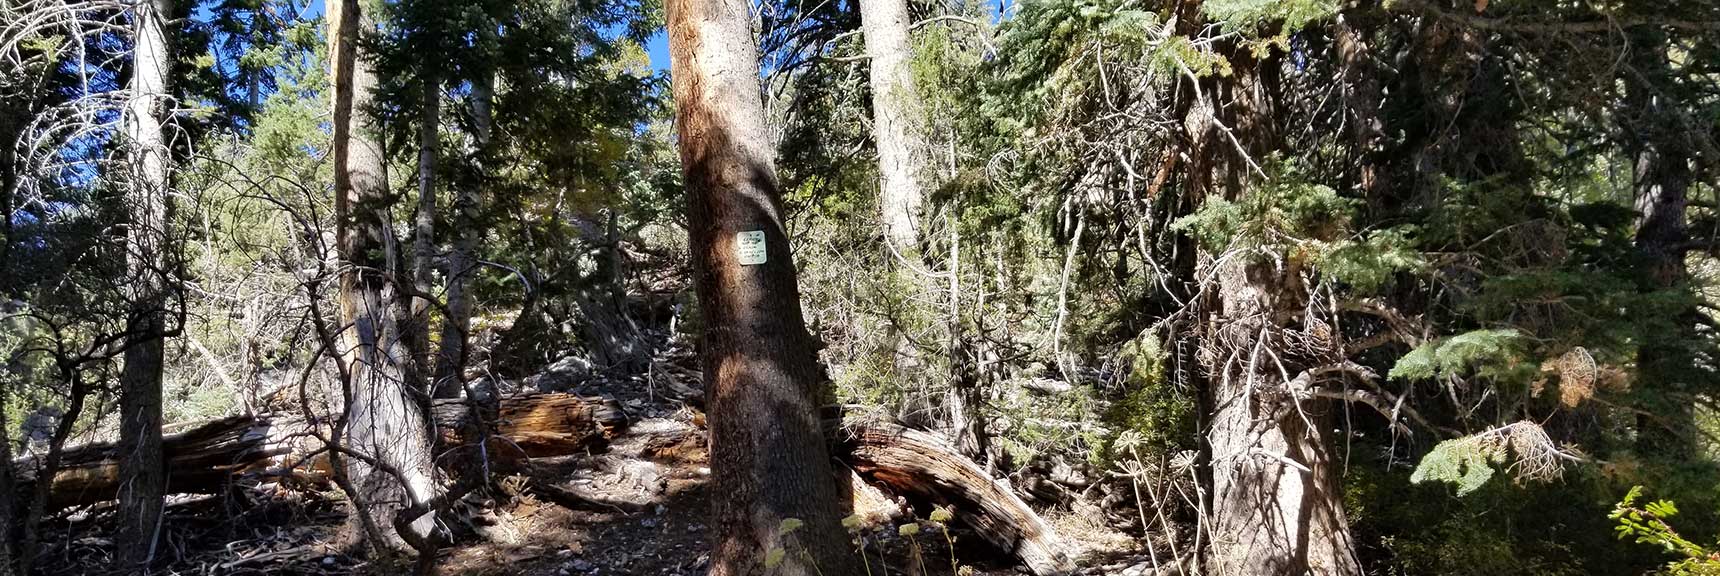 Miner's Claim Tree Marking the Approach Ridge to Cockscomb Peak and Ridge in Mt. Charleston Wilderness, Nevada